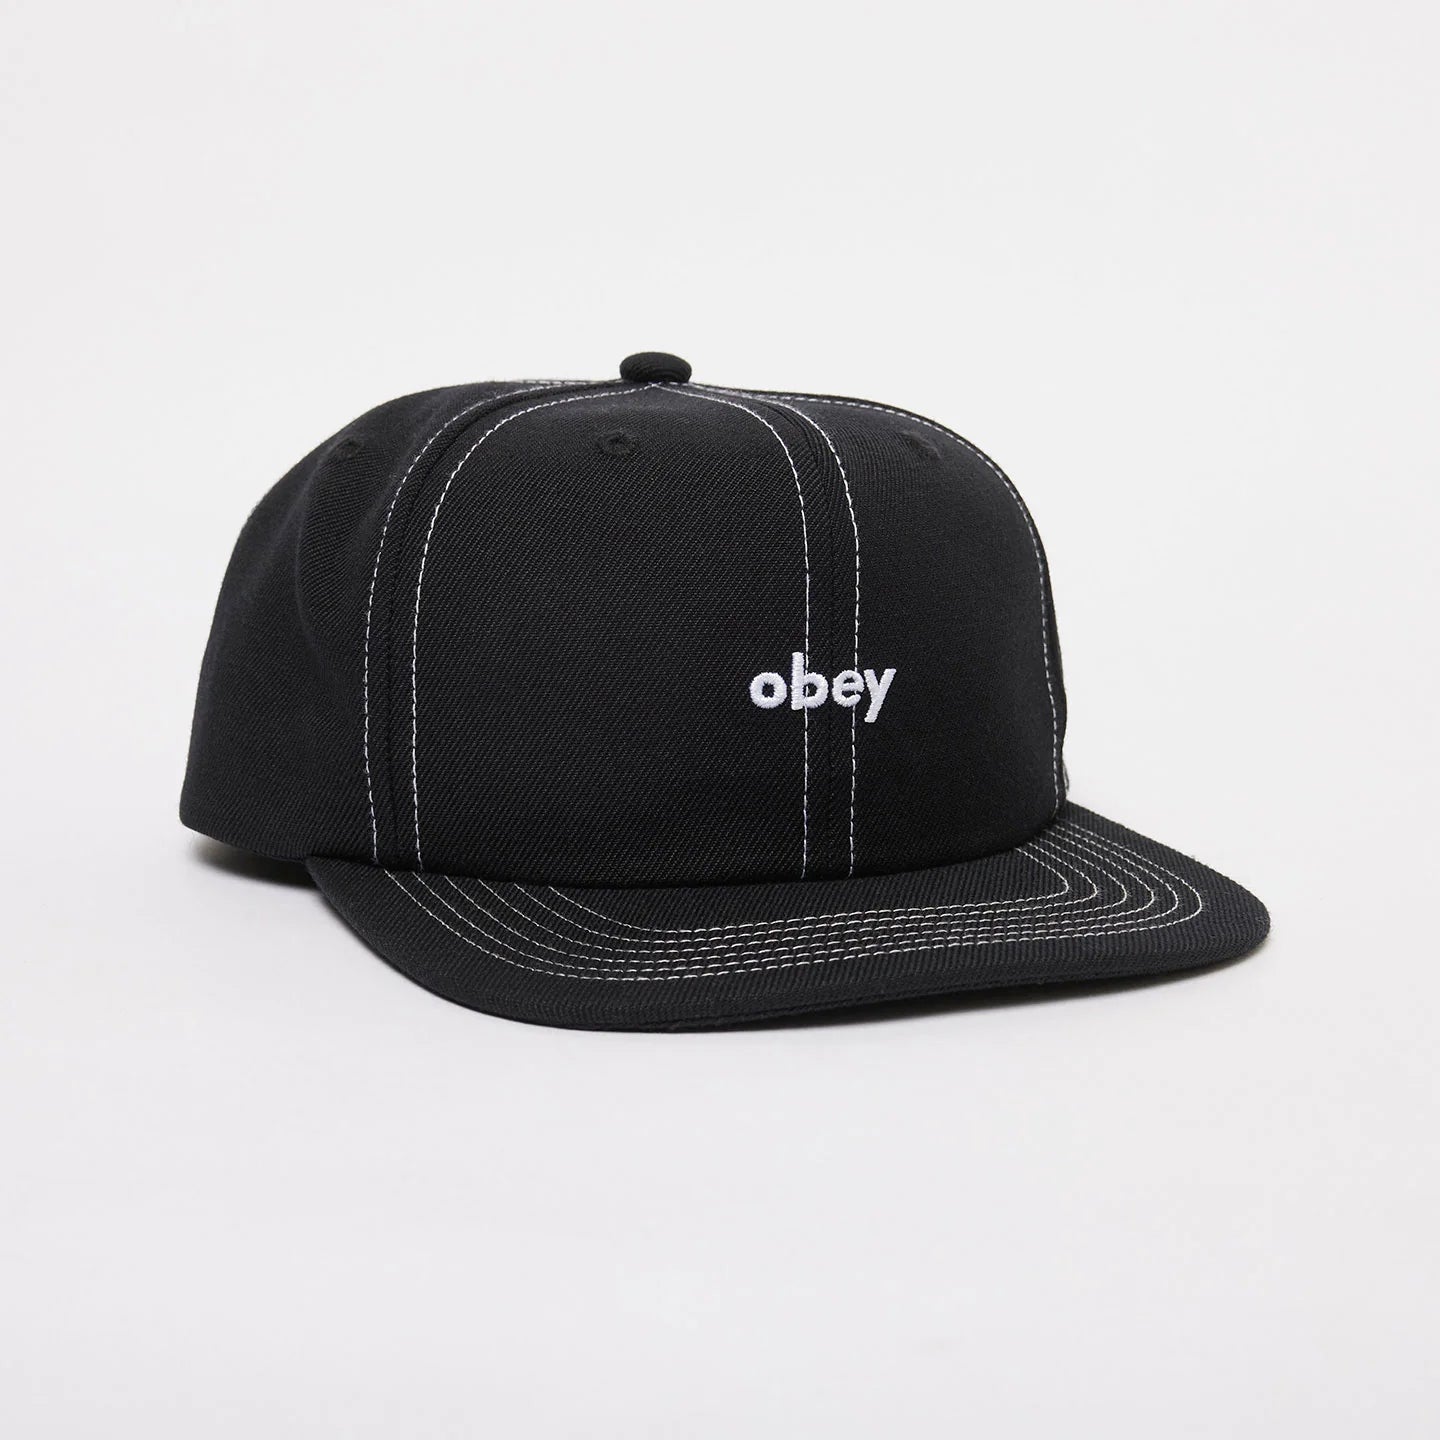 Obey Mix 6 Panel Classic Snapback (Black)